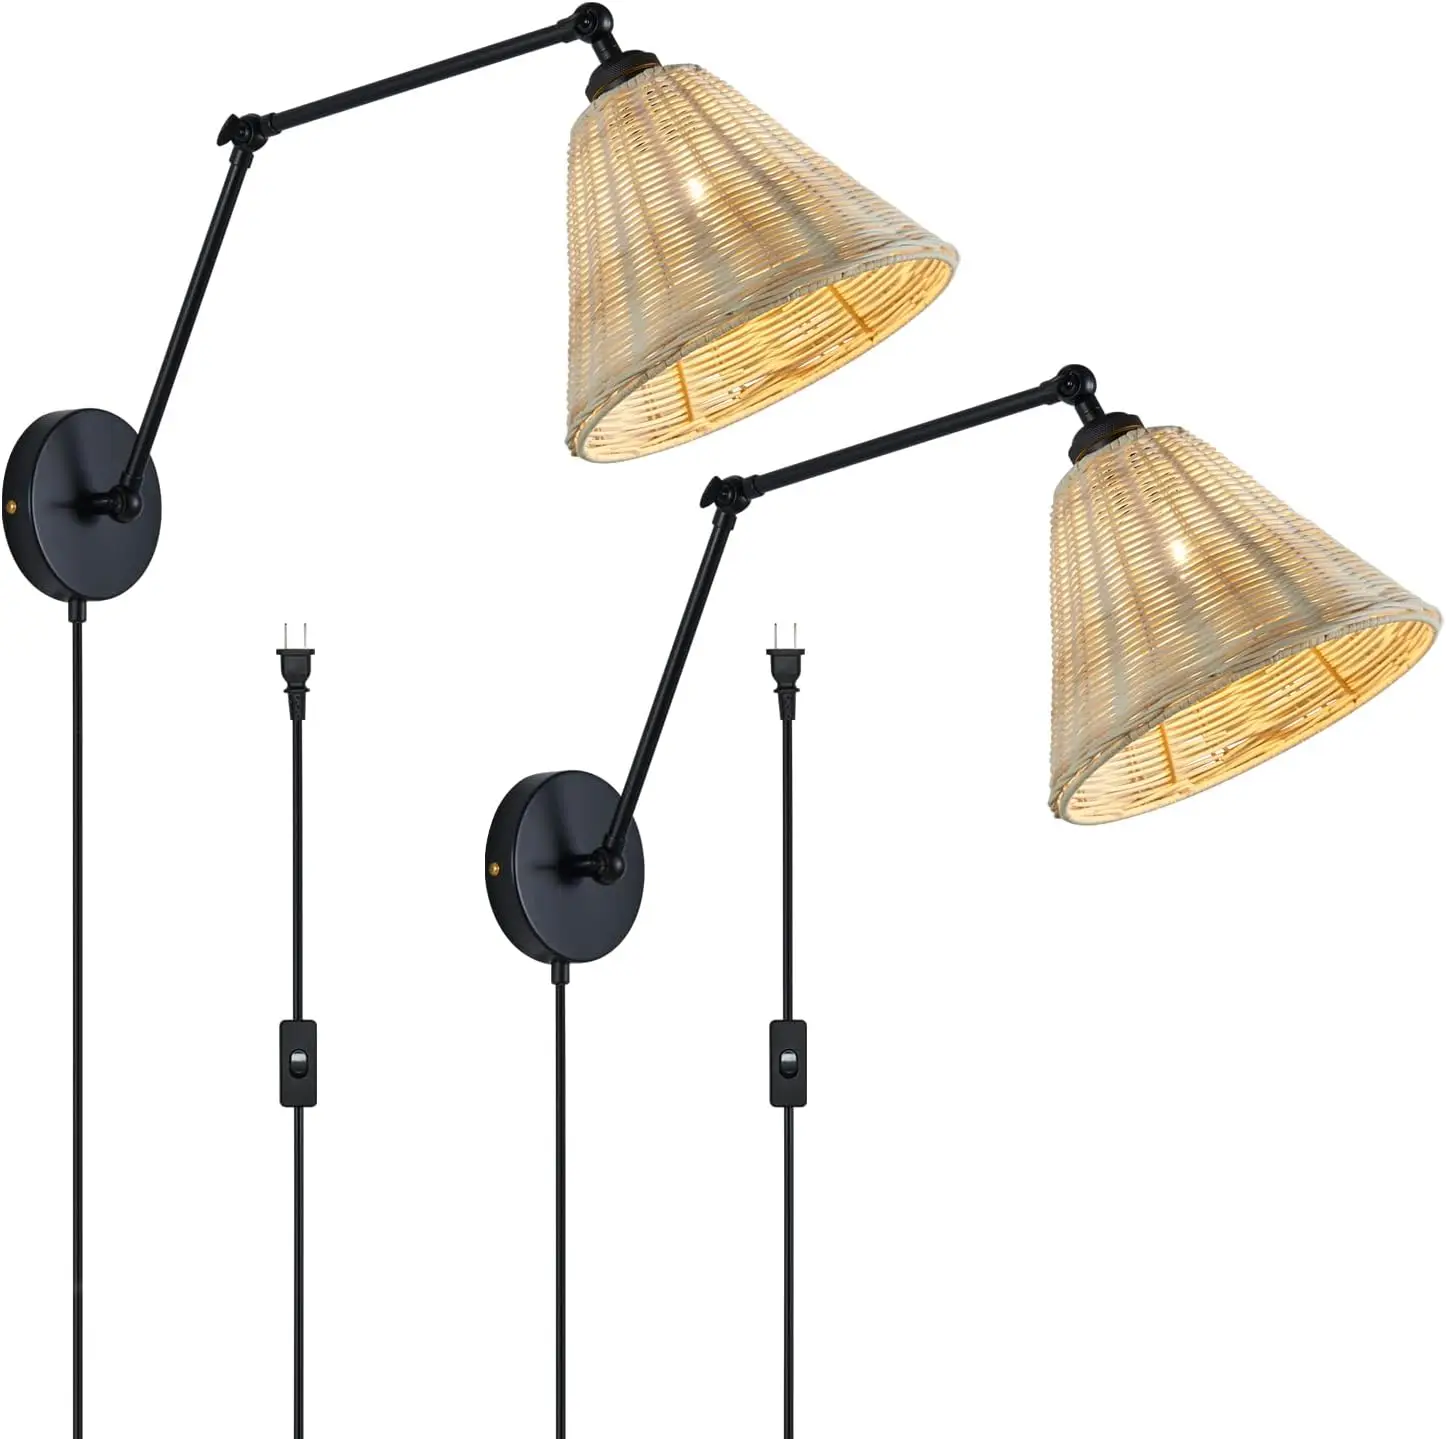 

in Sconces Lighting Rattan Set of 2 Adjustable Arm Plug in Sconce Lights for Bedroom Living Room Farmhouse Rustic Lamp Plug